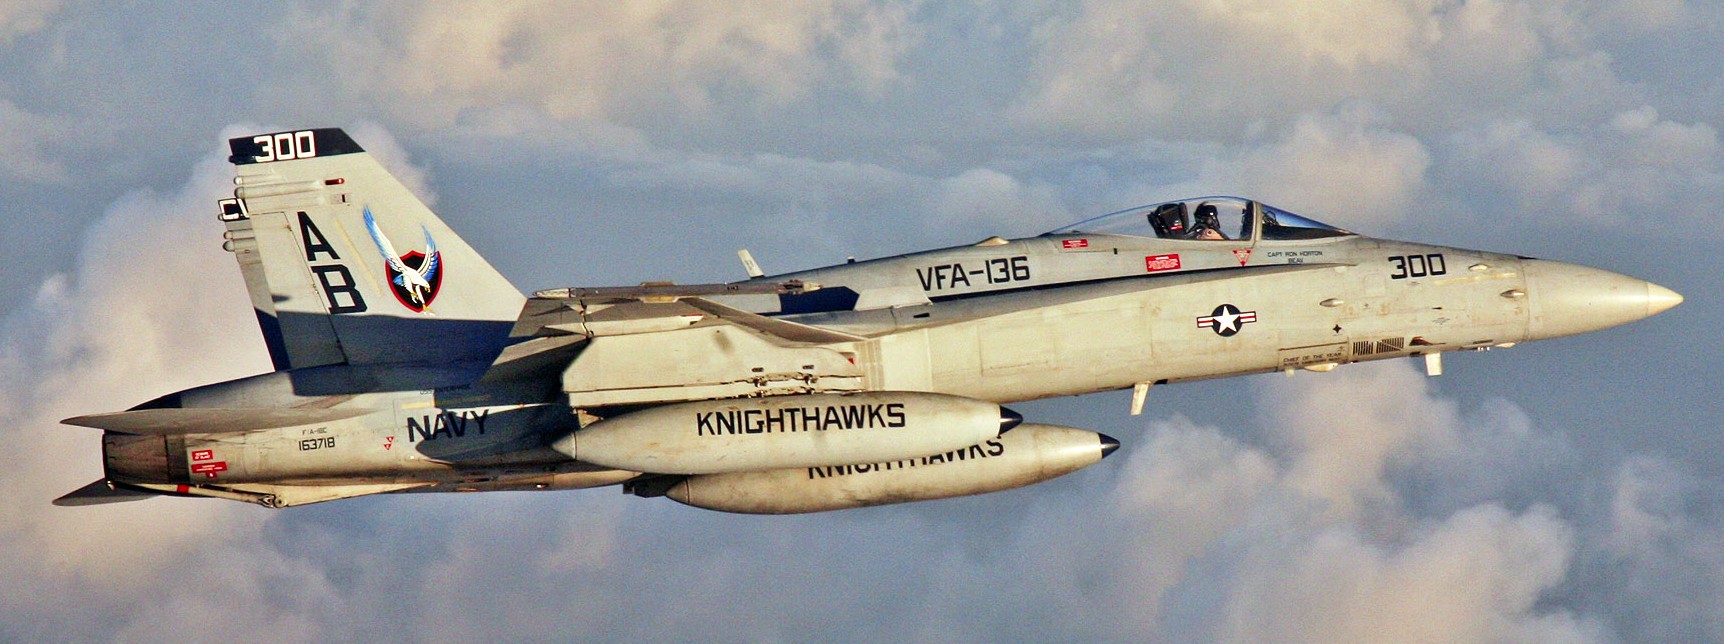 vfa-136 knighthawks strike fighter squadron f/a-18c hornet 2007 04 cvw-1 uss enterprise cvn-65